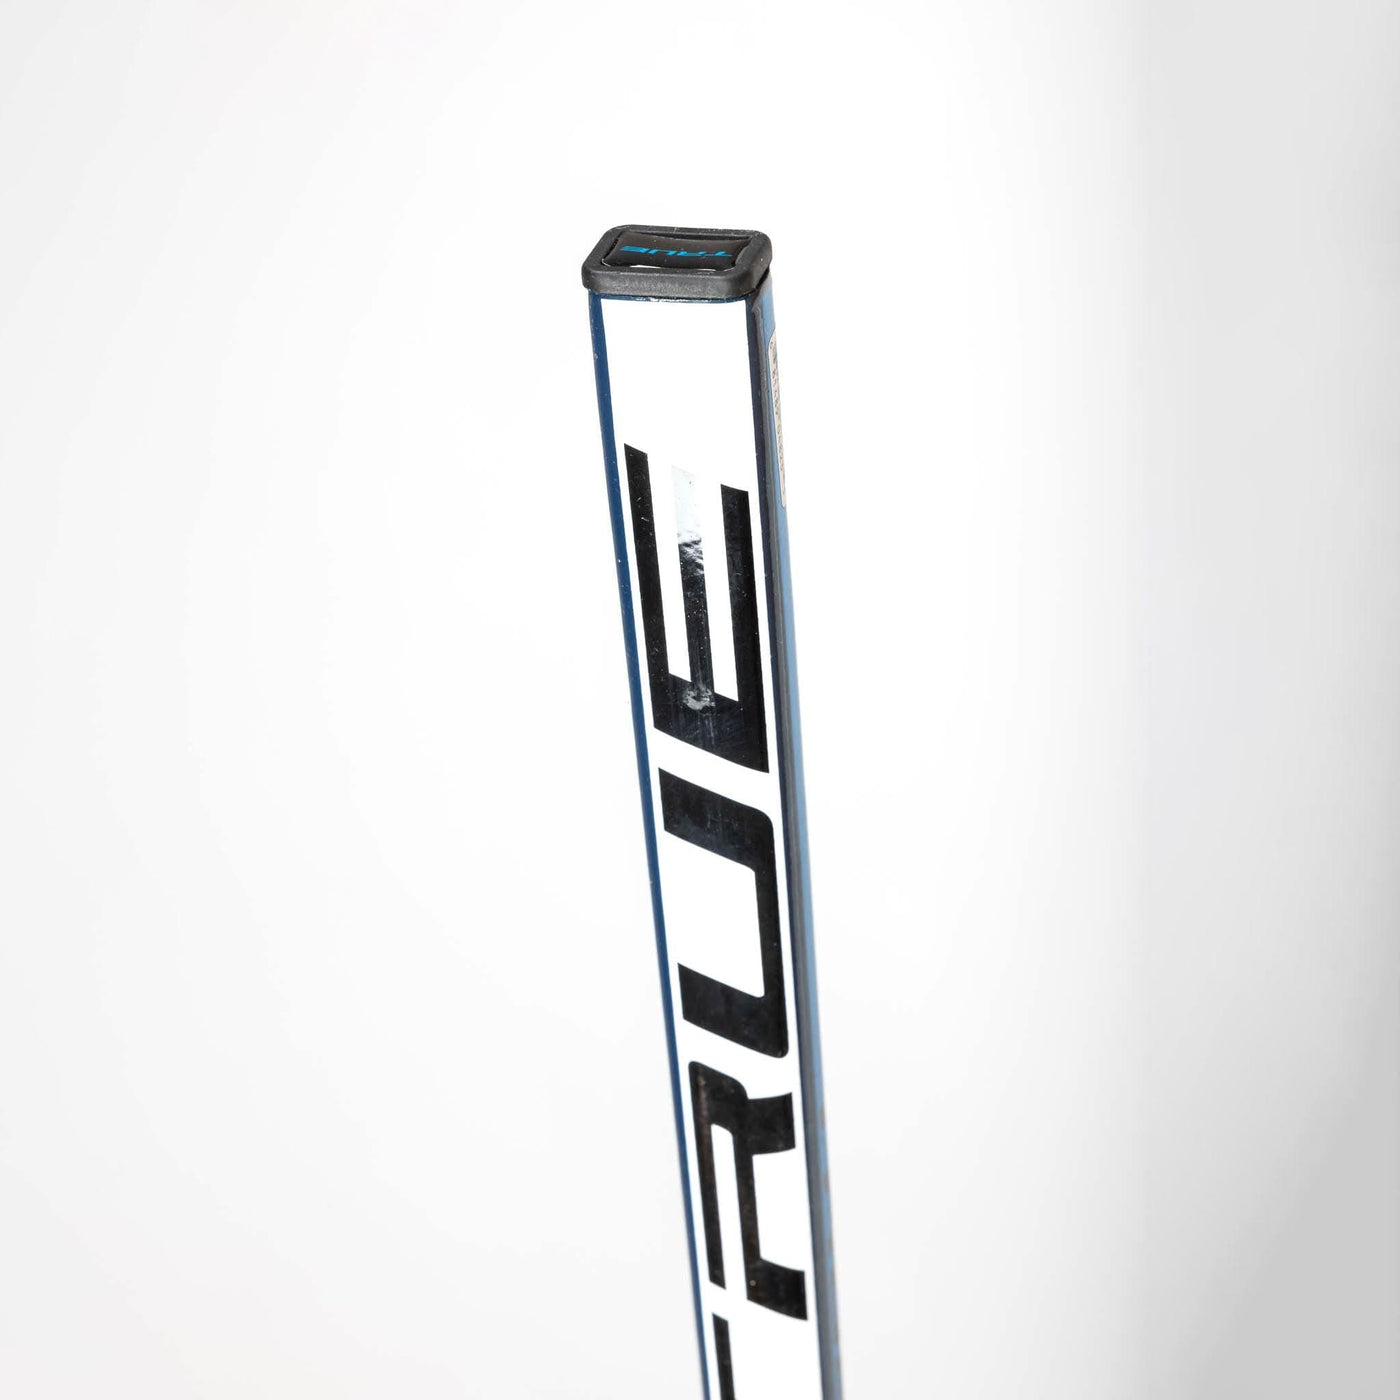 TRUE AX3 Junior Hockey Stick